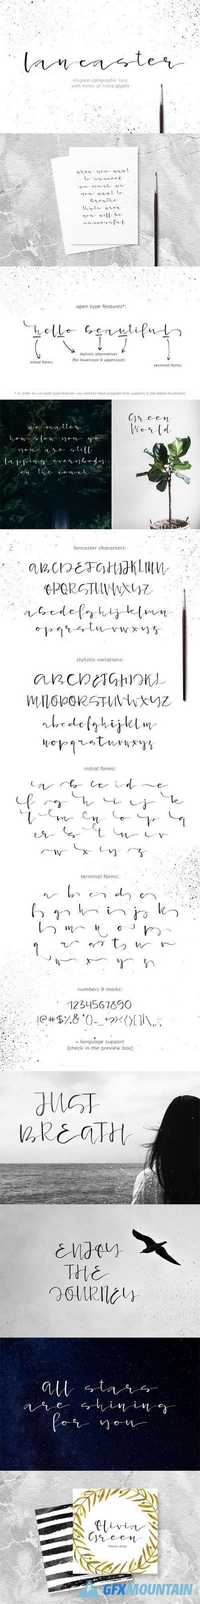 Lancaster - calligraphic font